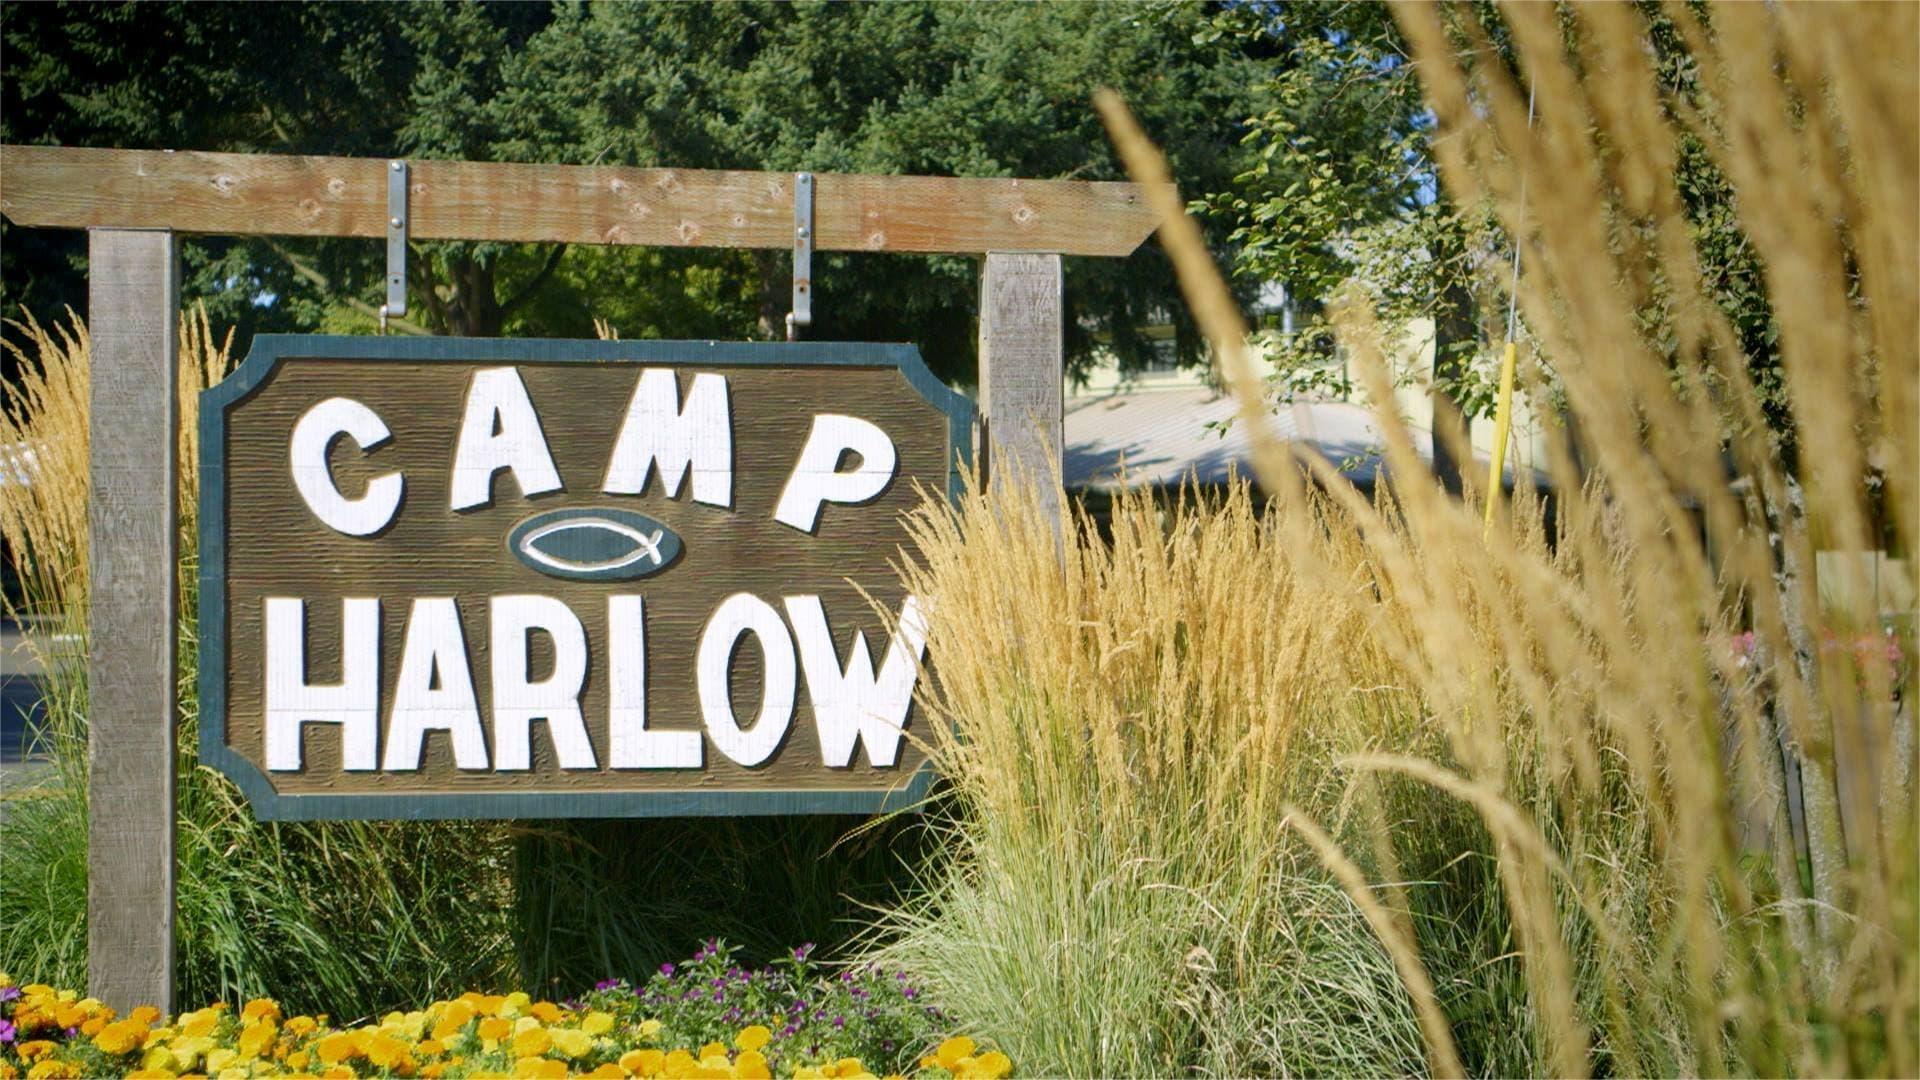 Camp Harlow backdrop